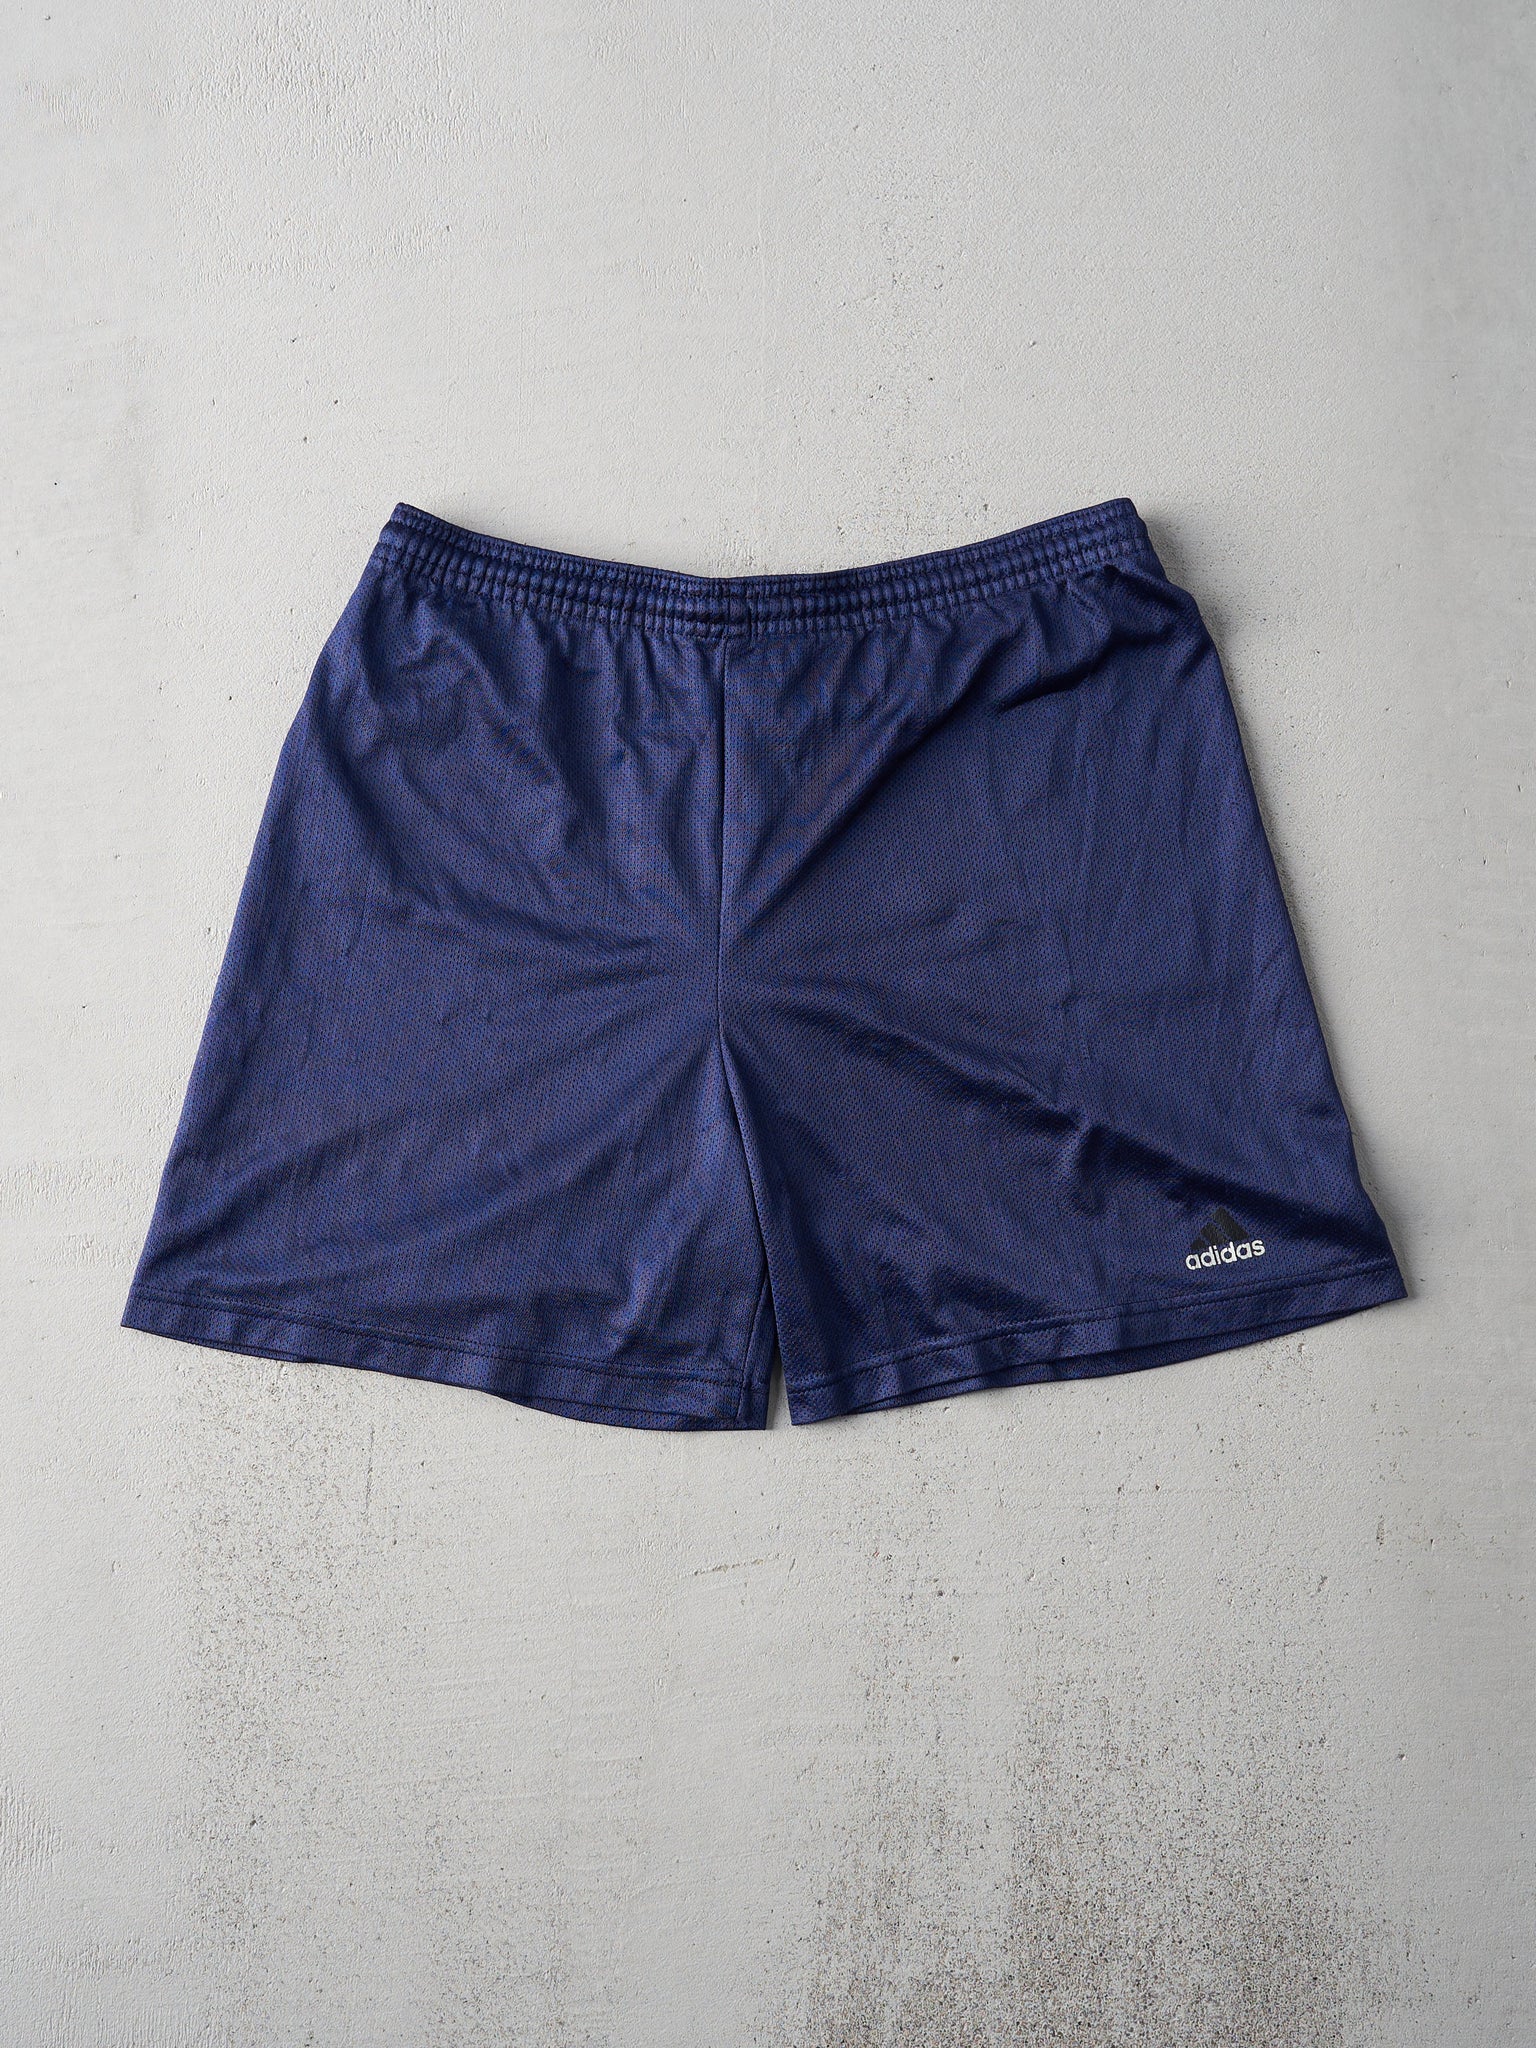 Vintage 90s Navy Adidas Athletic Shorts (33x5)